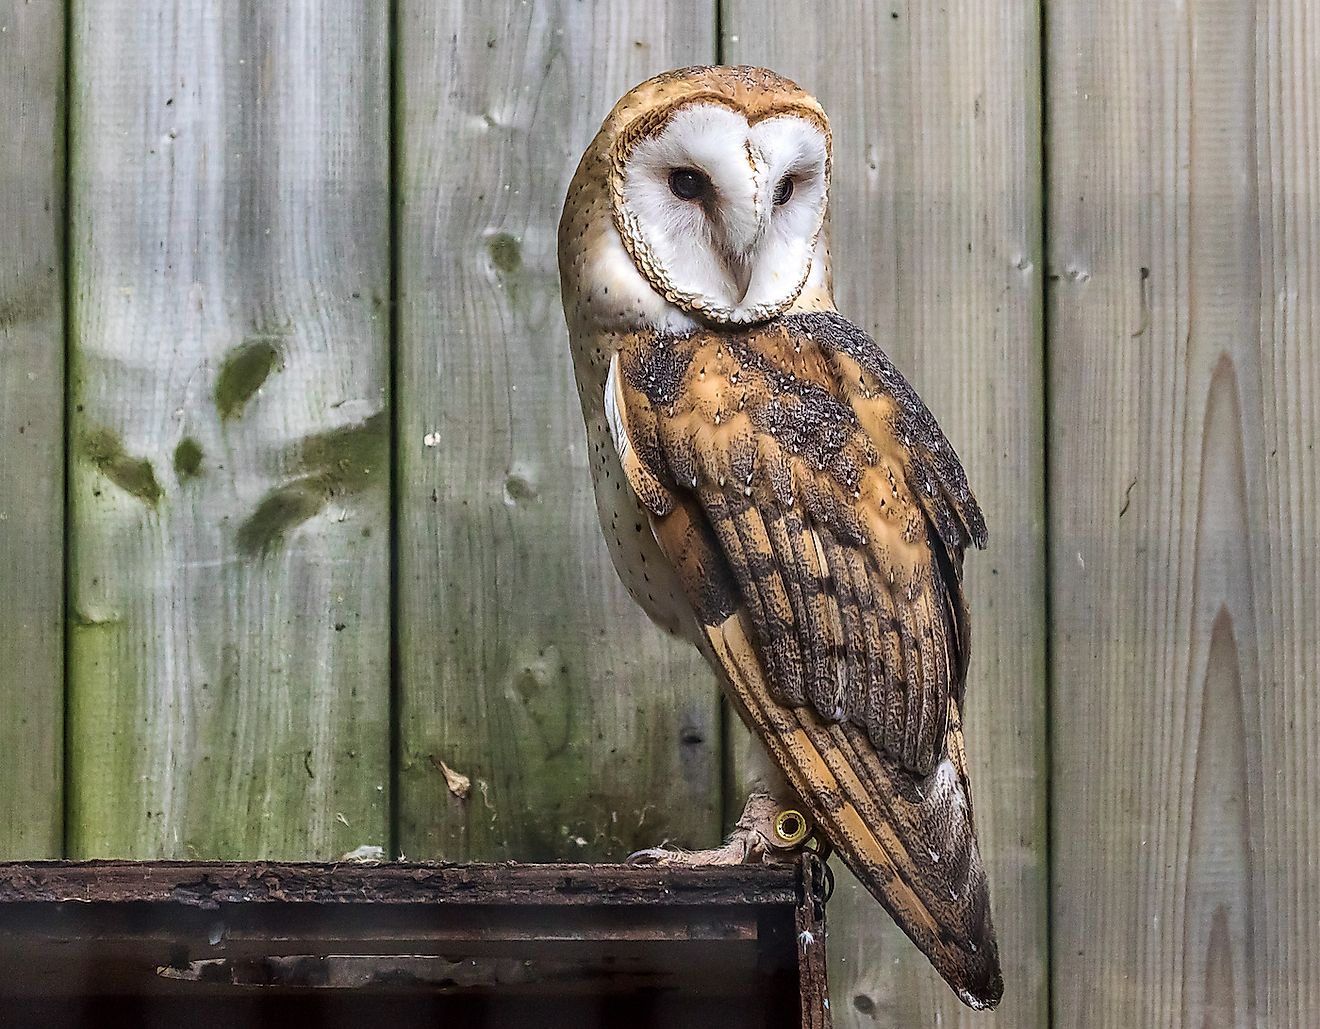 Barn Owl. Image credit: Benoit Daoust/Shutterstock.com